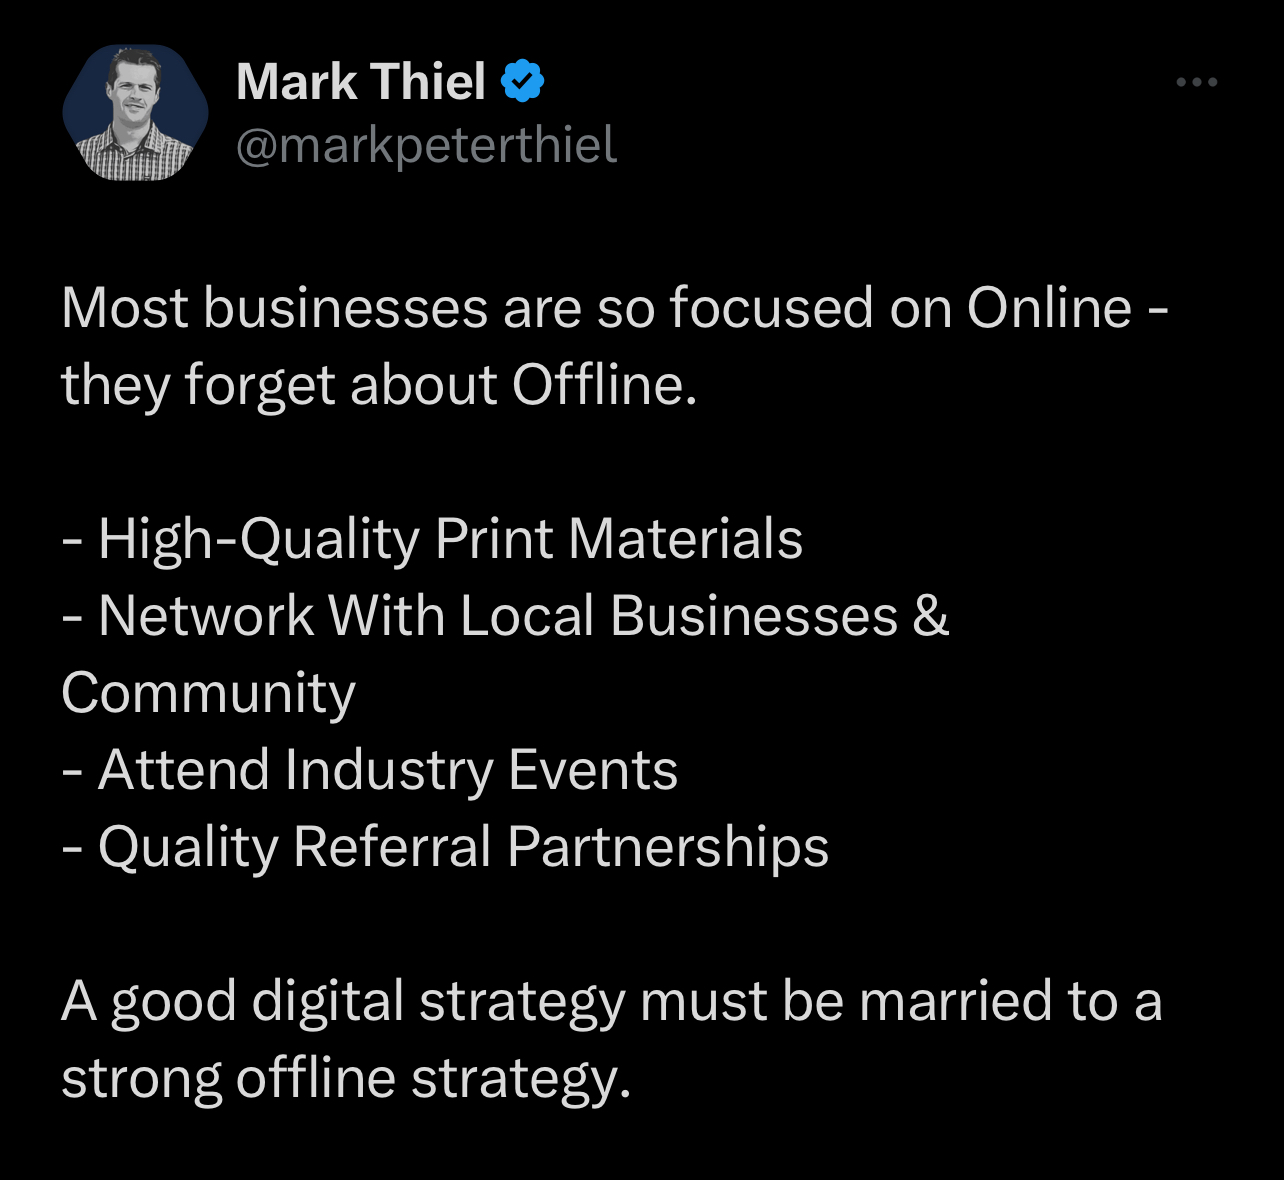 Offline vs Online - Mark Thiel (X)